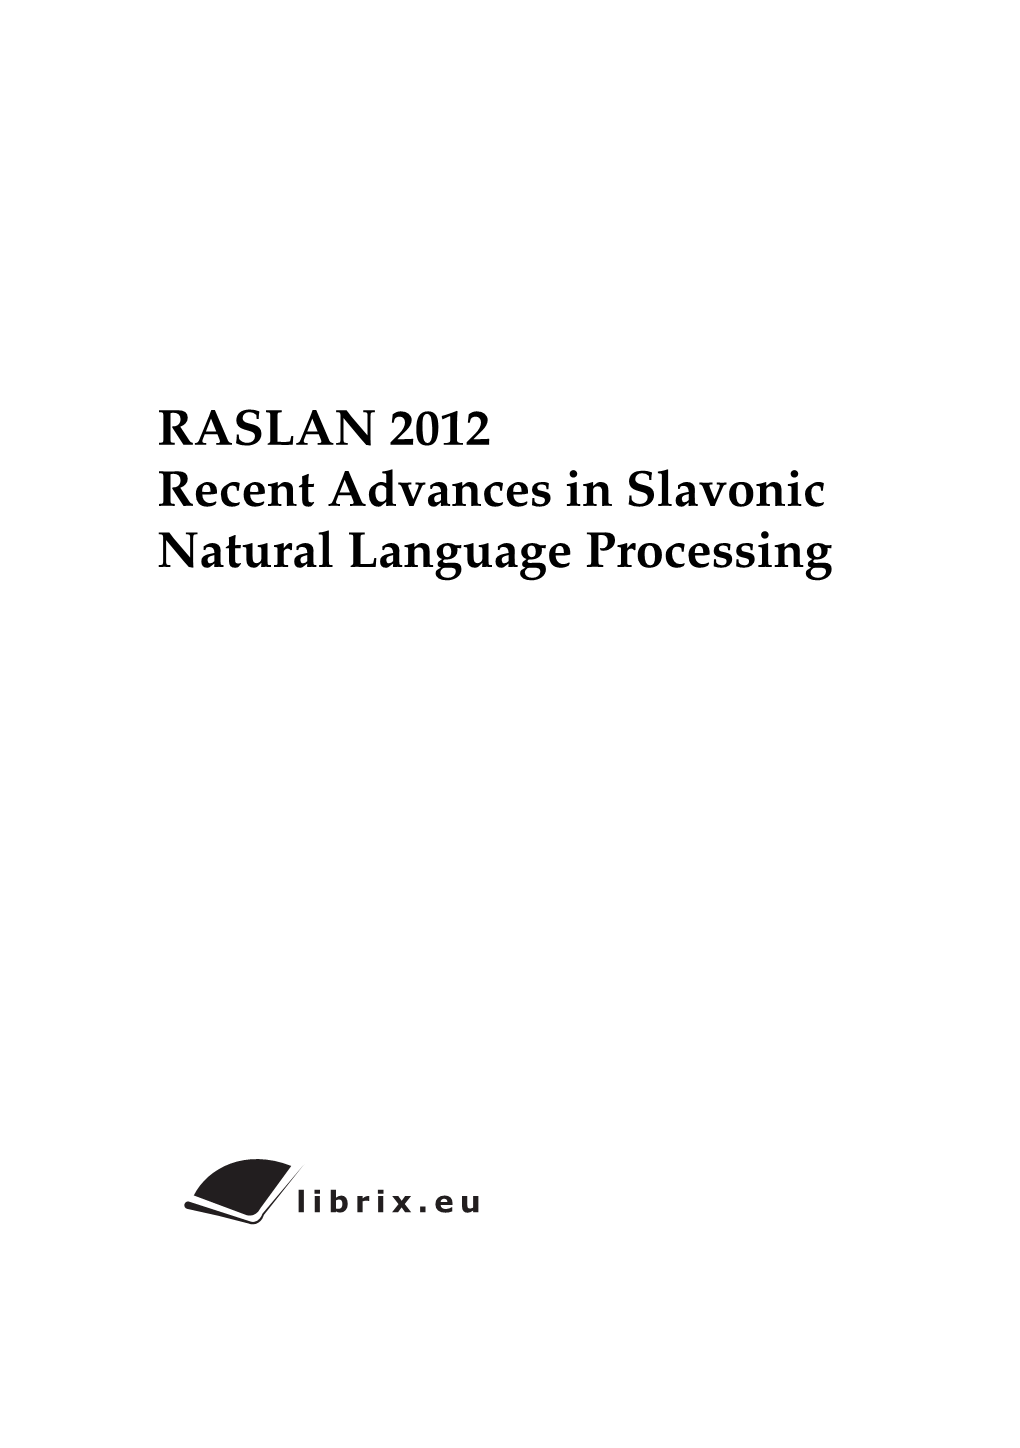 RASLAN 2012 Recent Advances in Slavonic Natural Language Processing